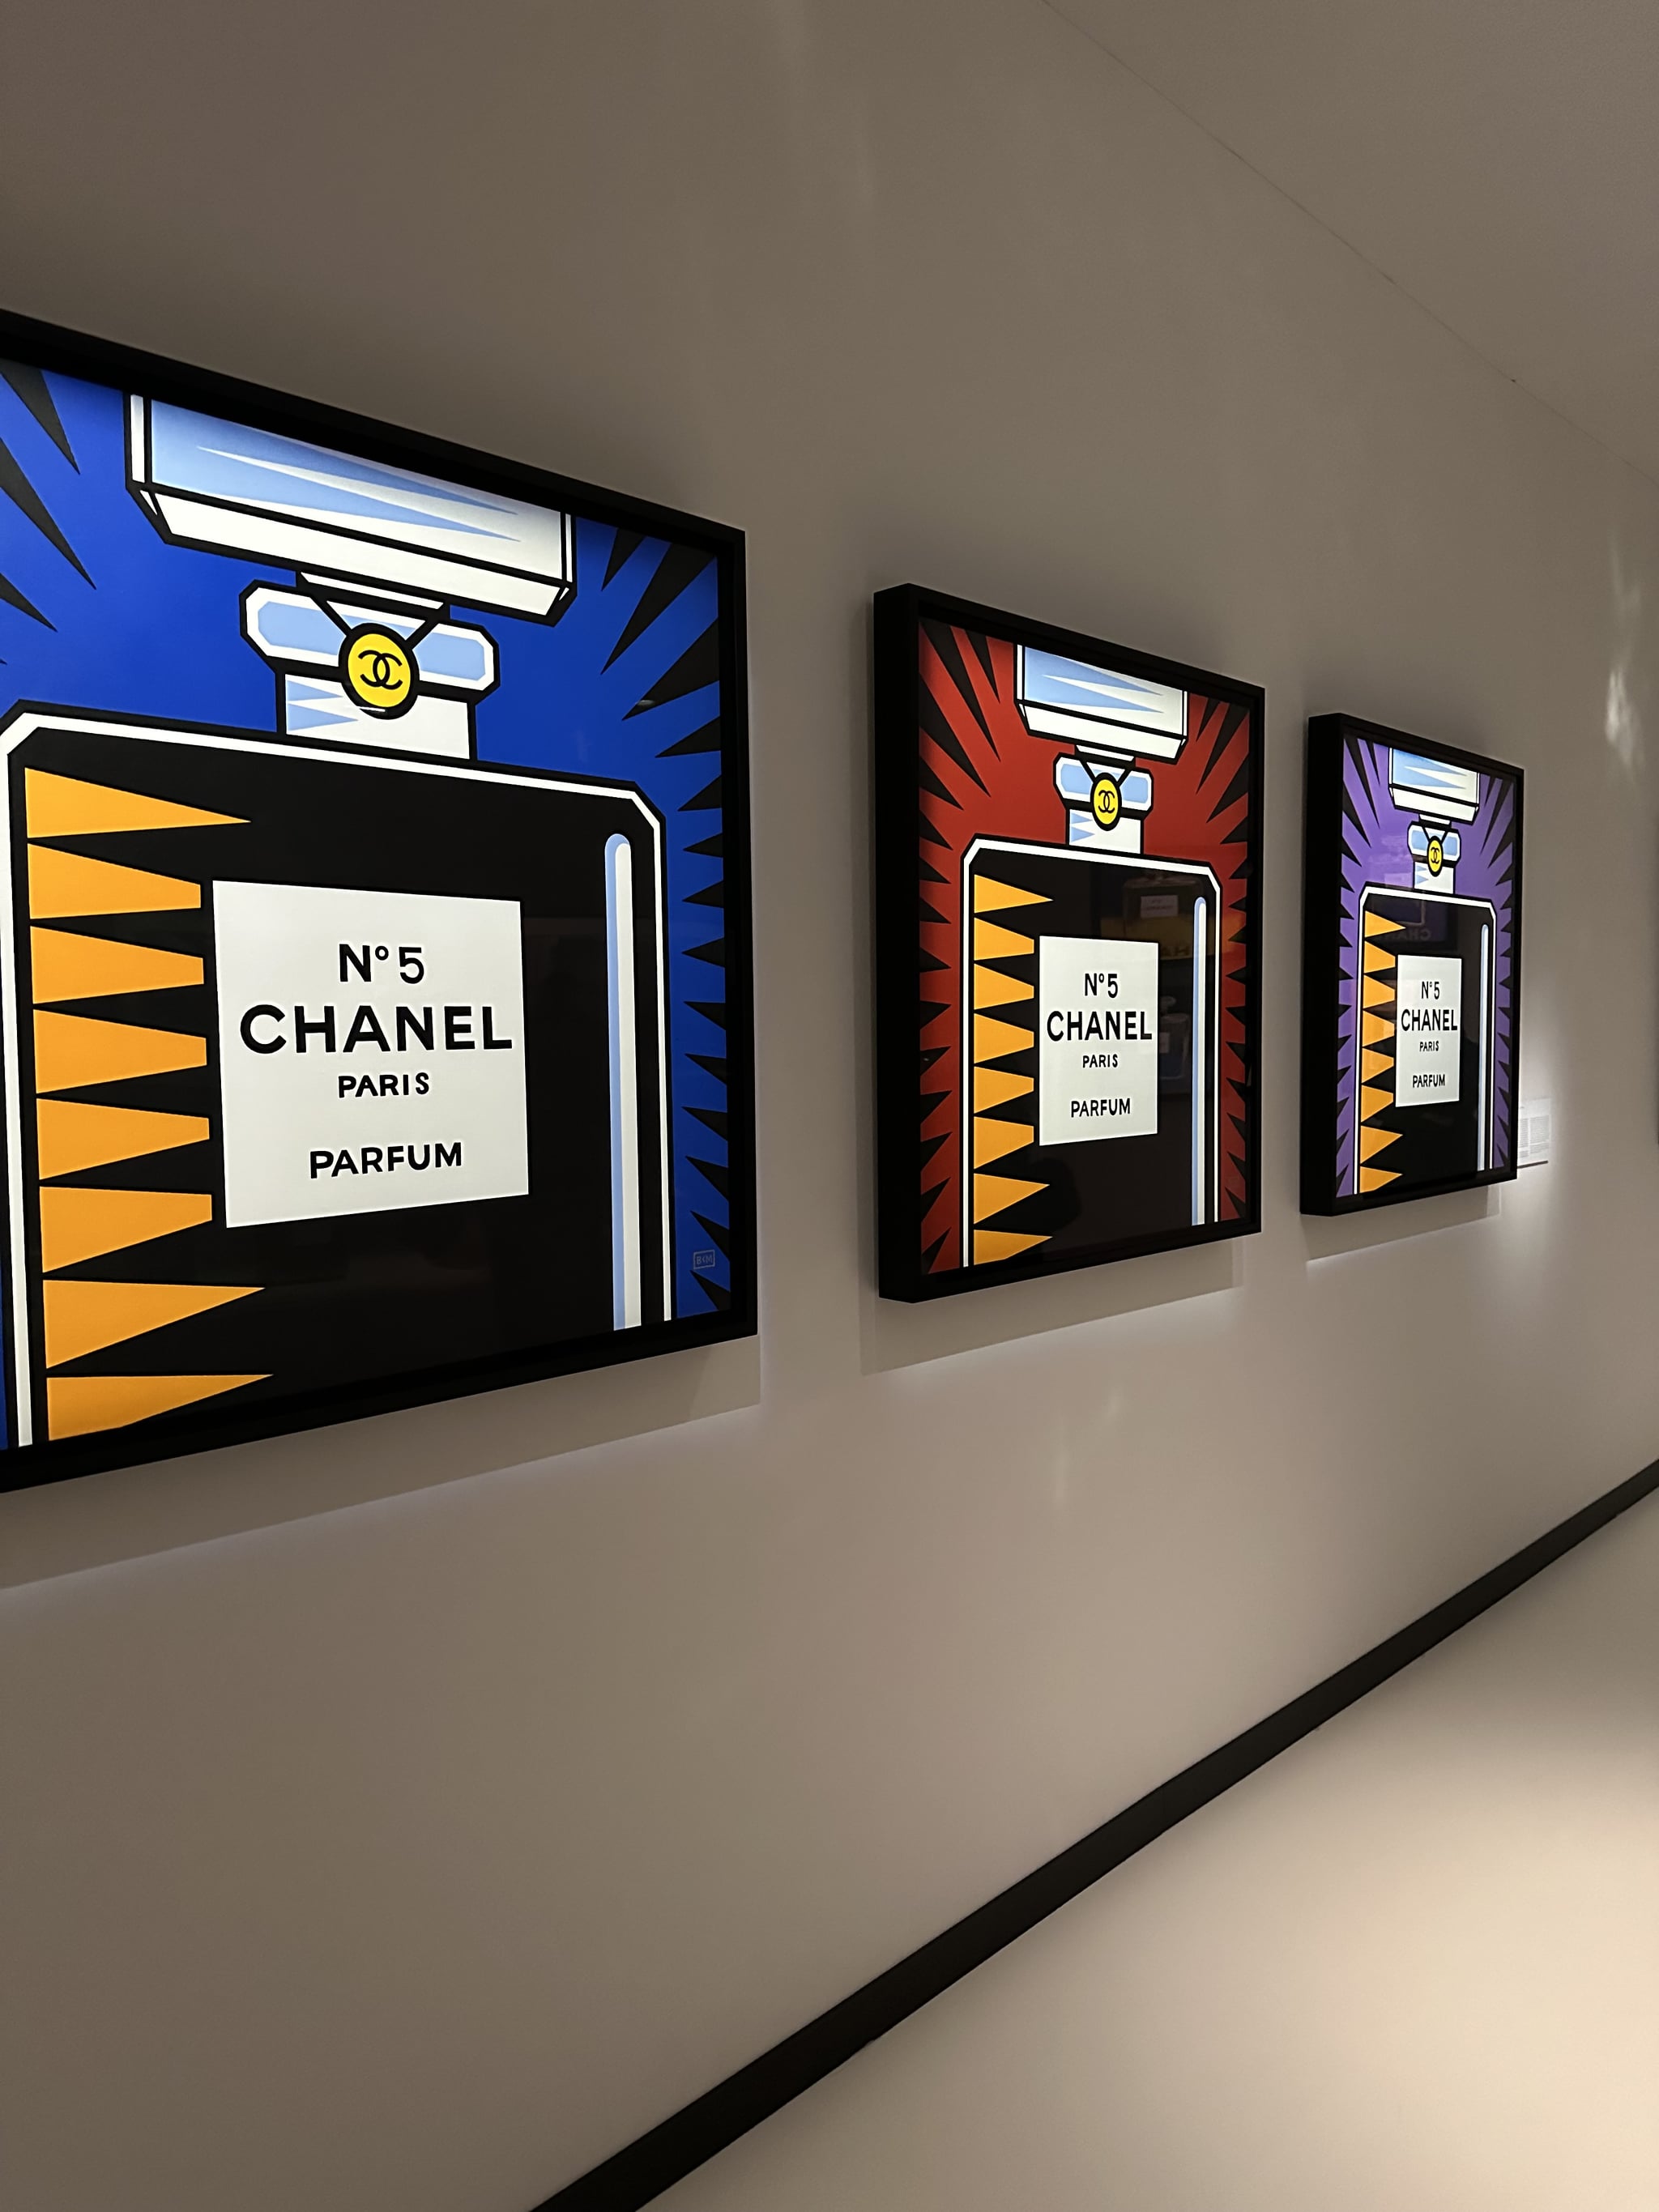 Chanel fragrance exhibit in Paris.